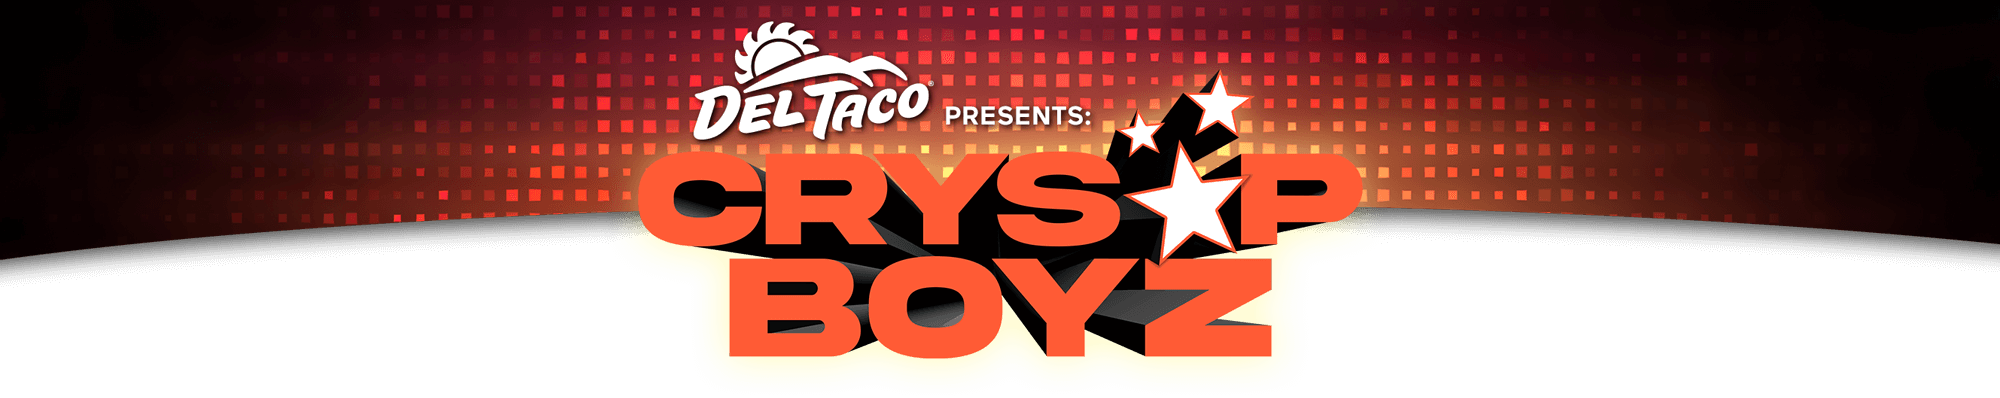 Del Taco Presents Crys P Boyz